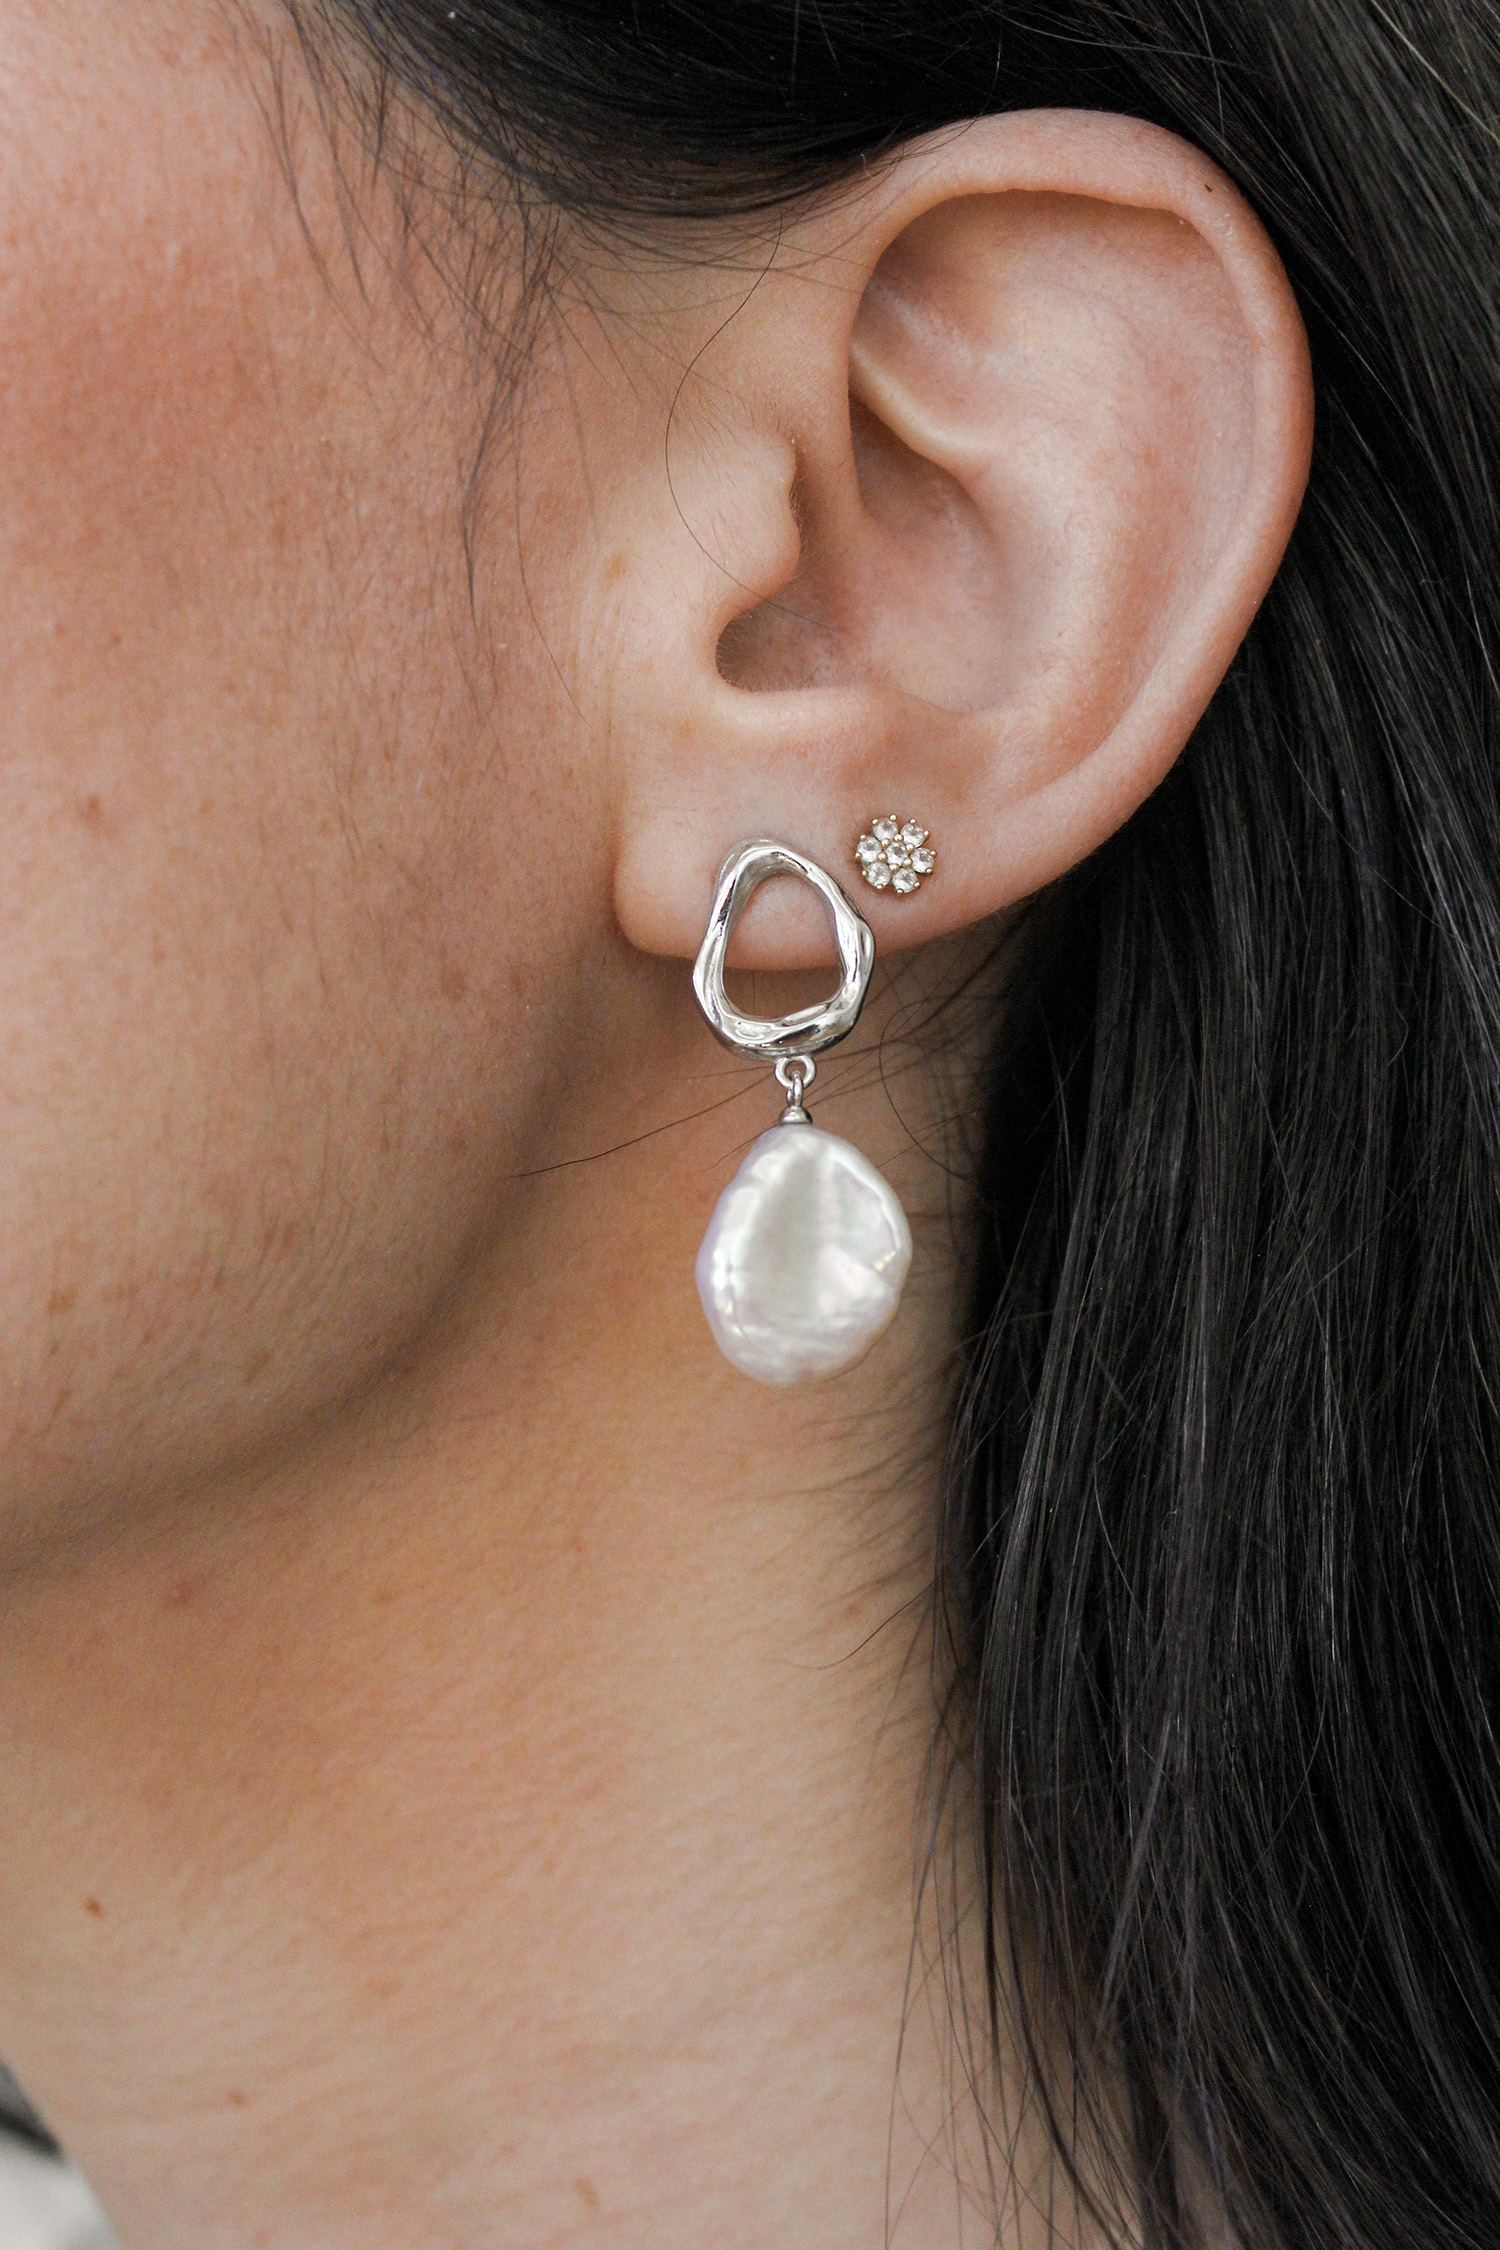 Dainty earring stack flower stud with pearl drop earring